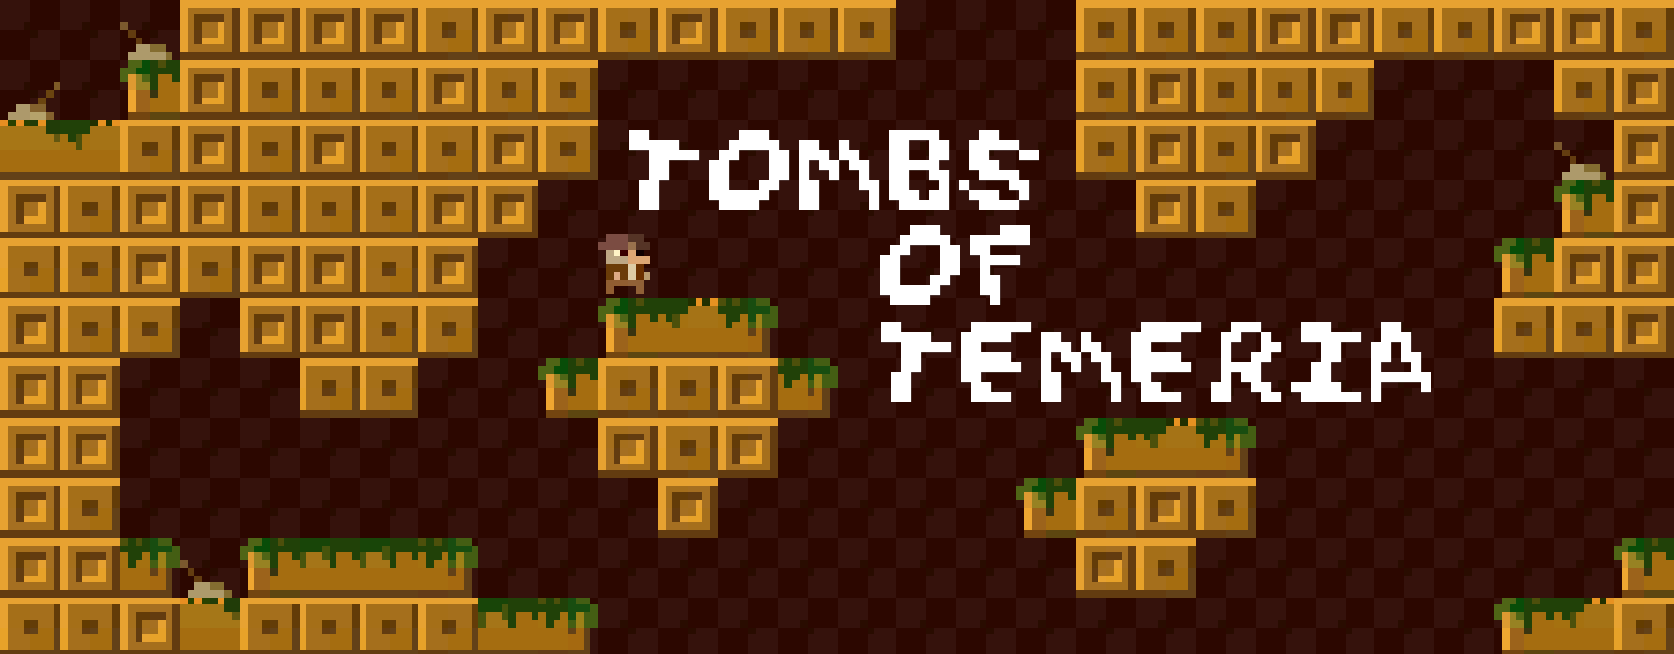 Tombs Of Temeria